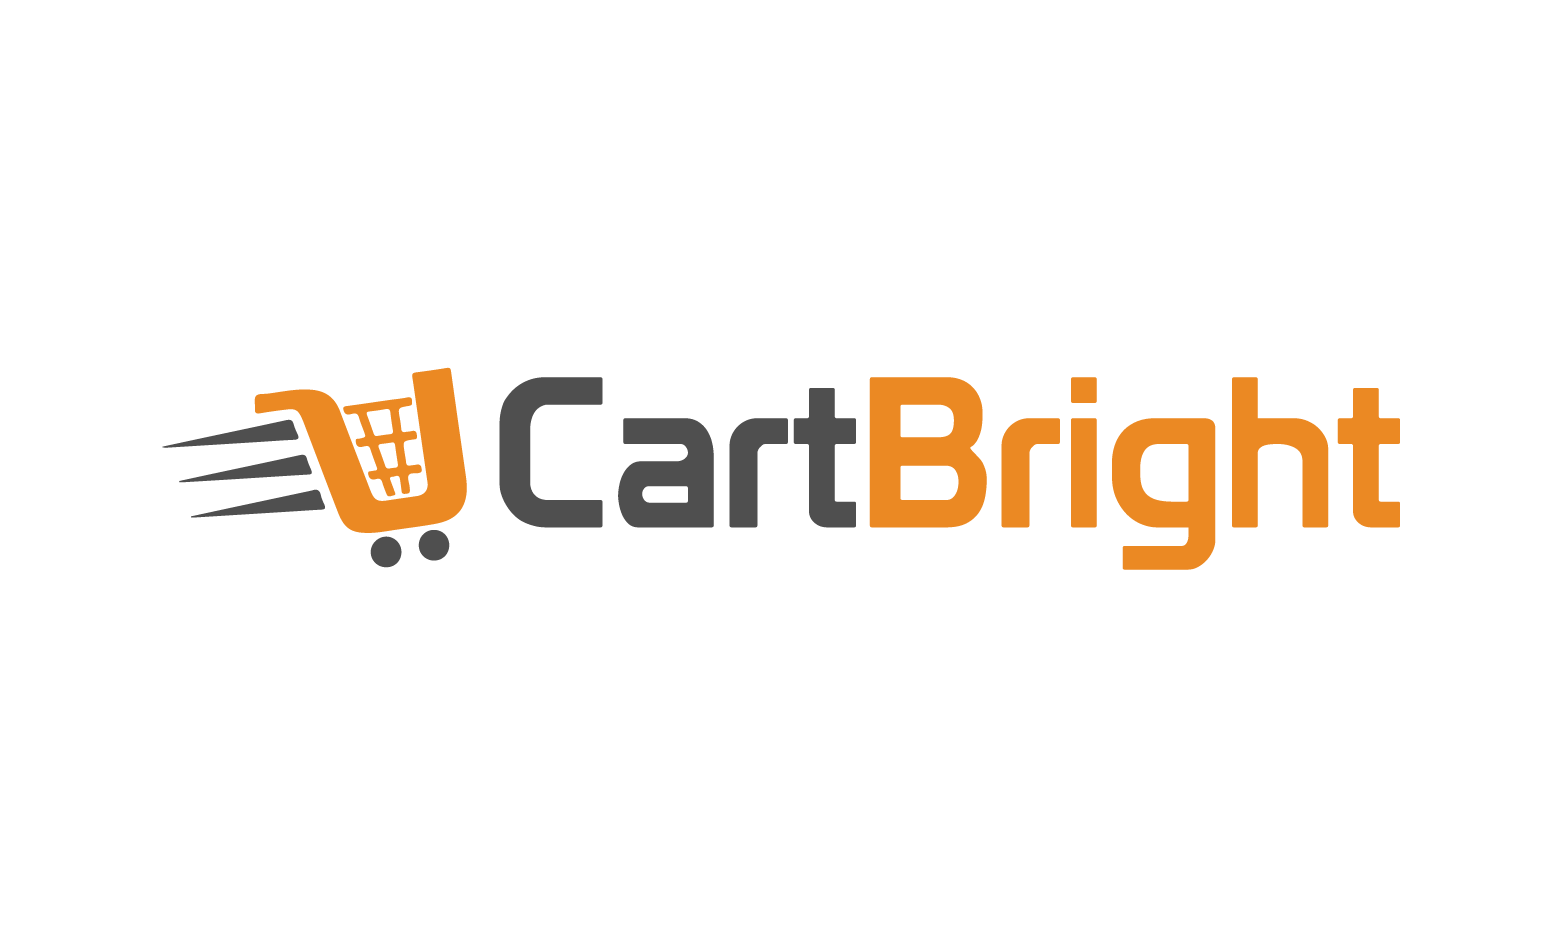 CartBright.com - Creative brandable domain for sale